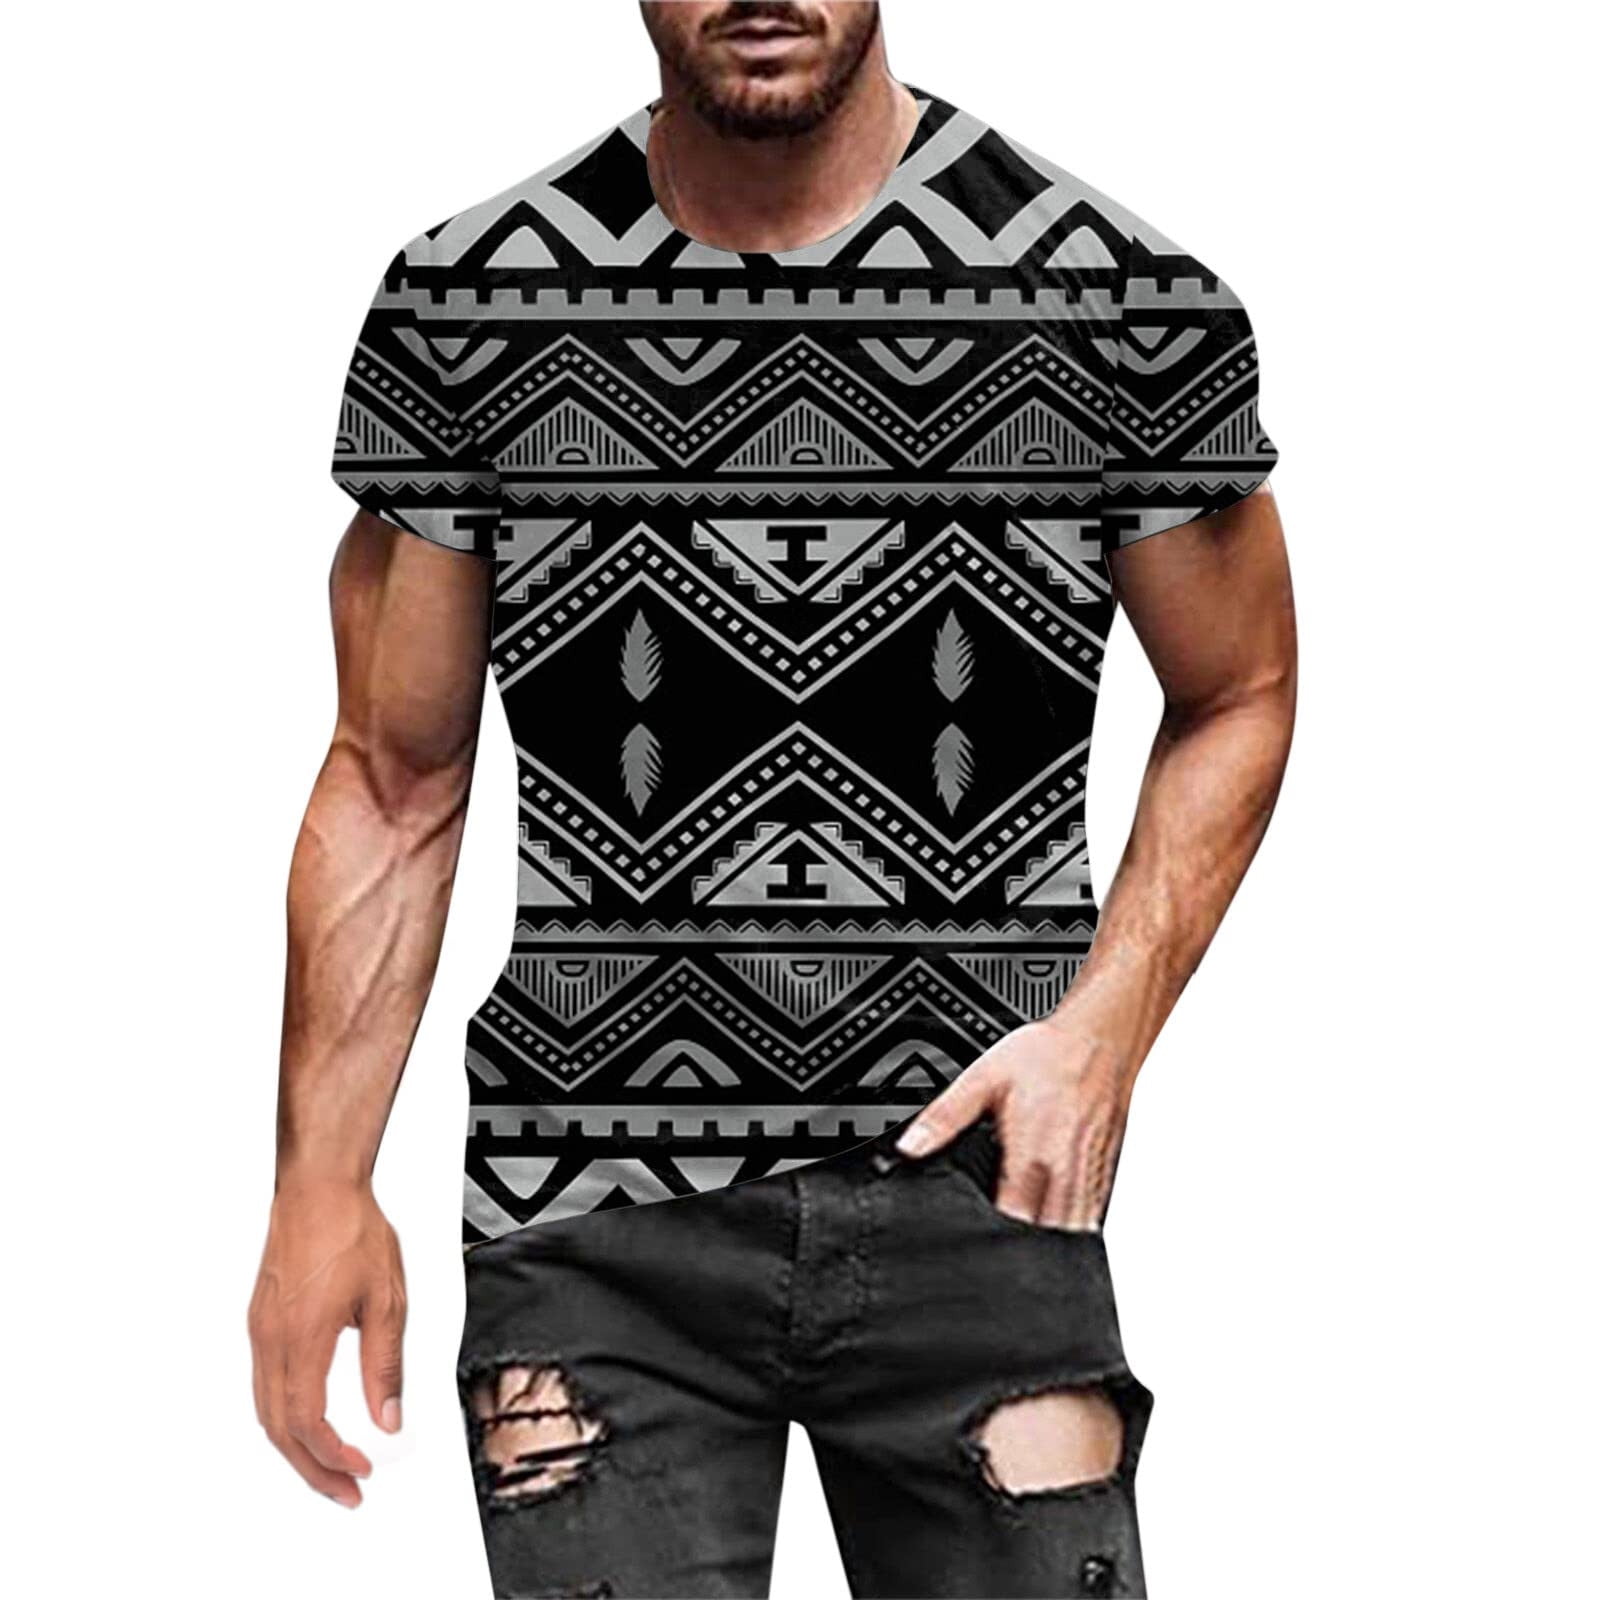 Penkiiy Men's Fashion Summer Neckline T-shirt 3D Printing Pattern Short  Sleeve T-shirts with Pockets XL Black On Sale 